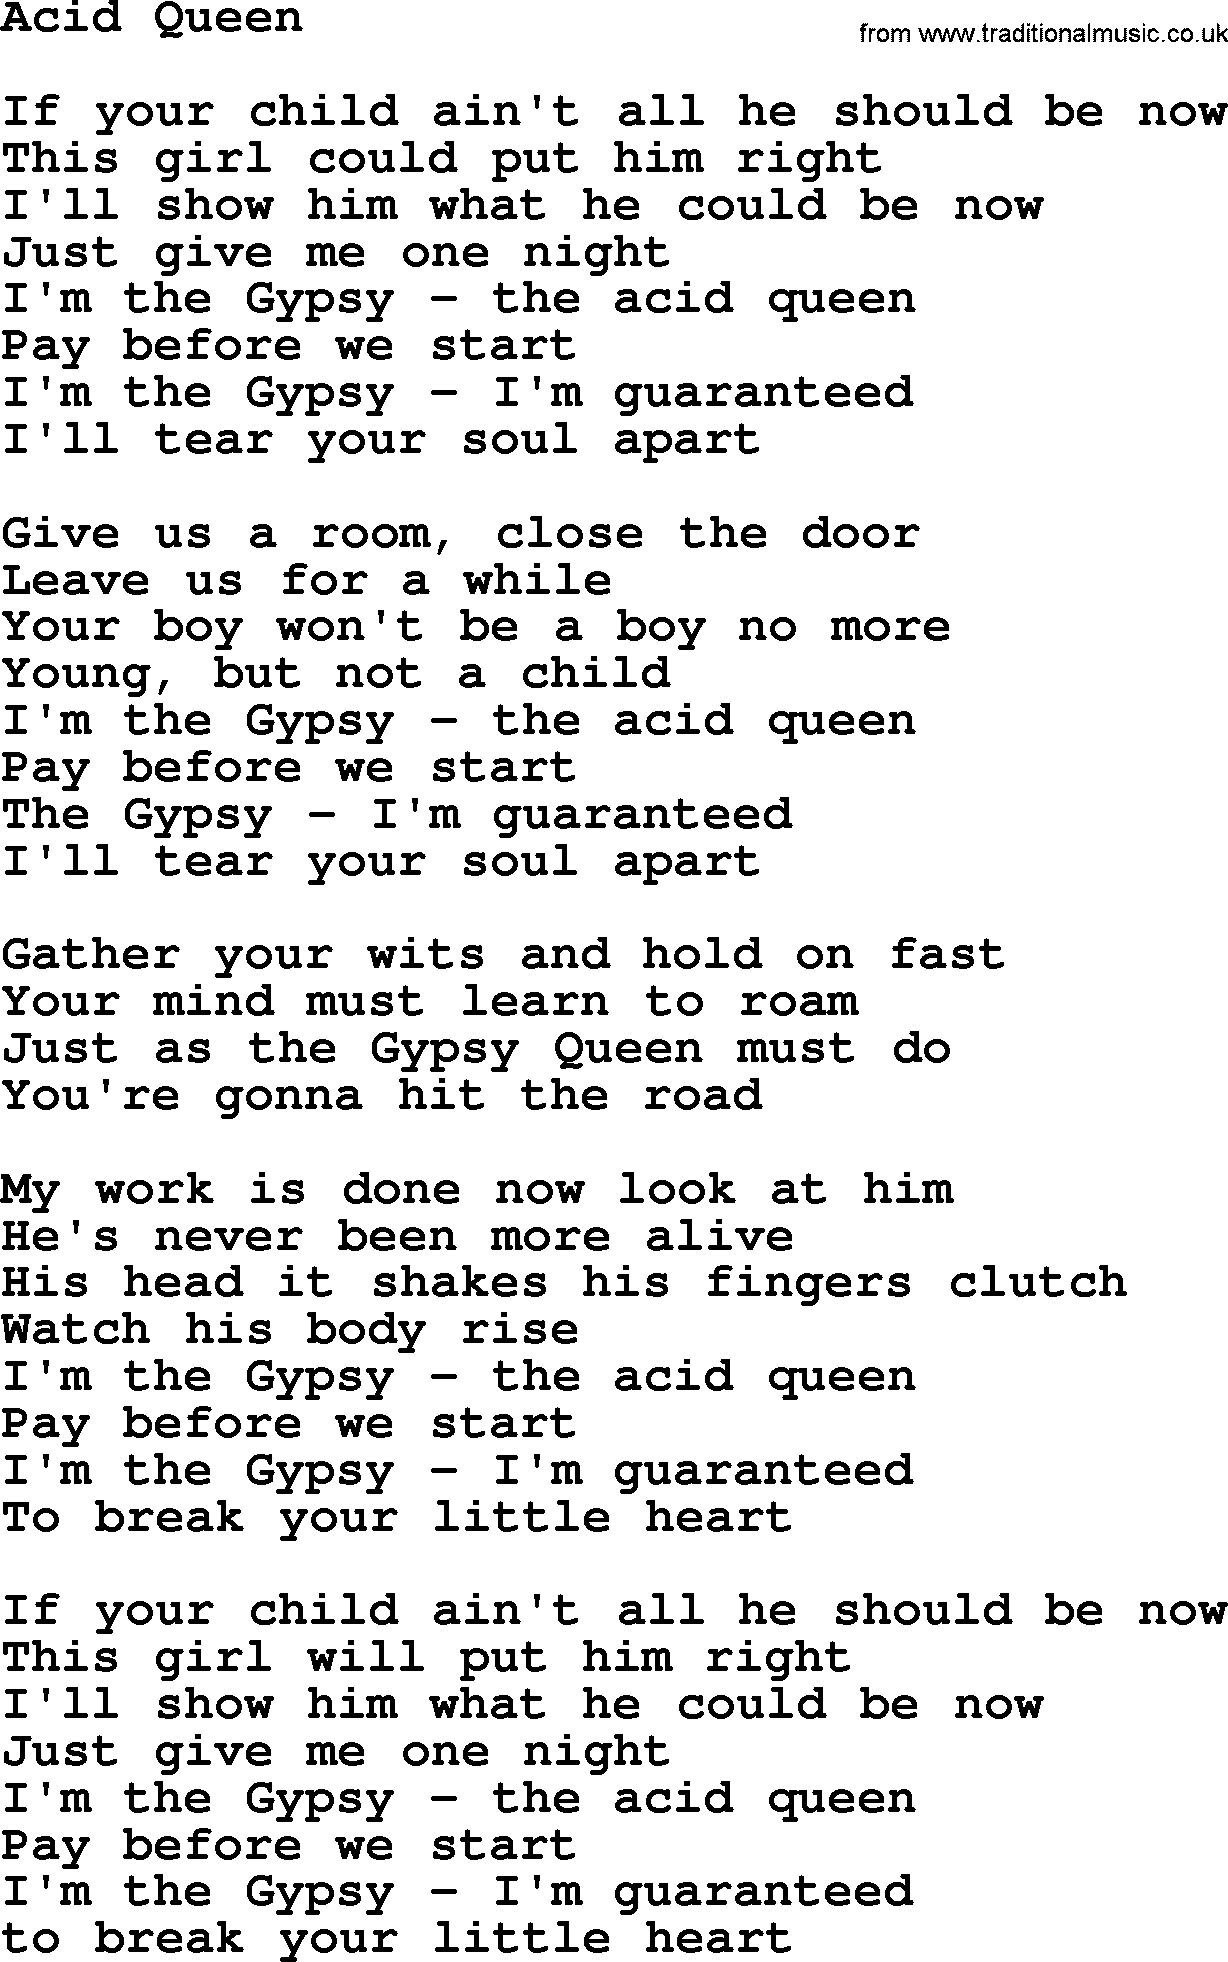 The Byrds song Acid Queen, lyrics